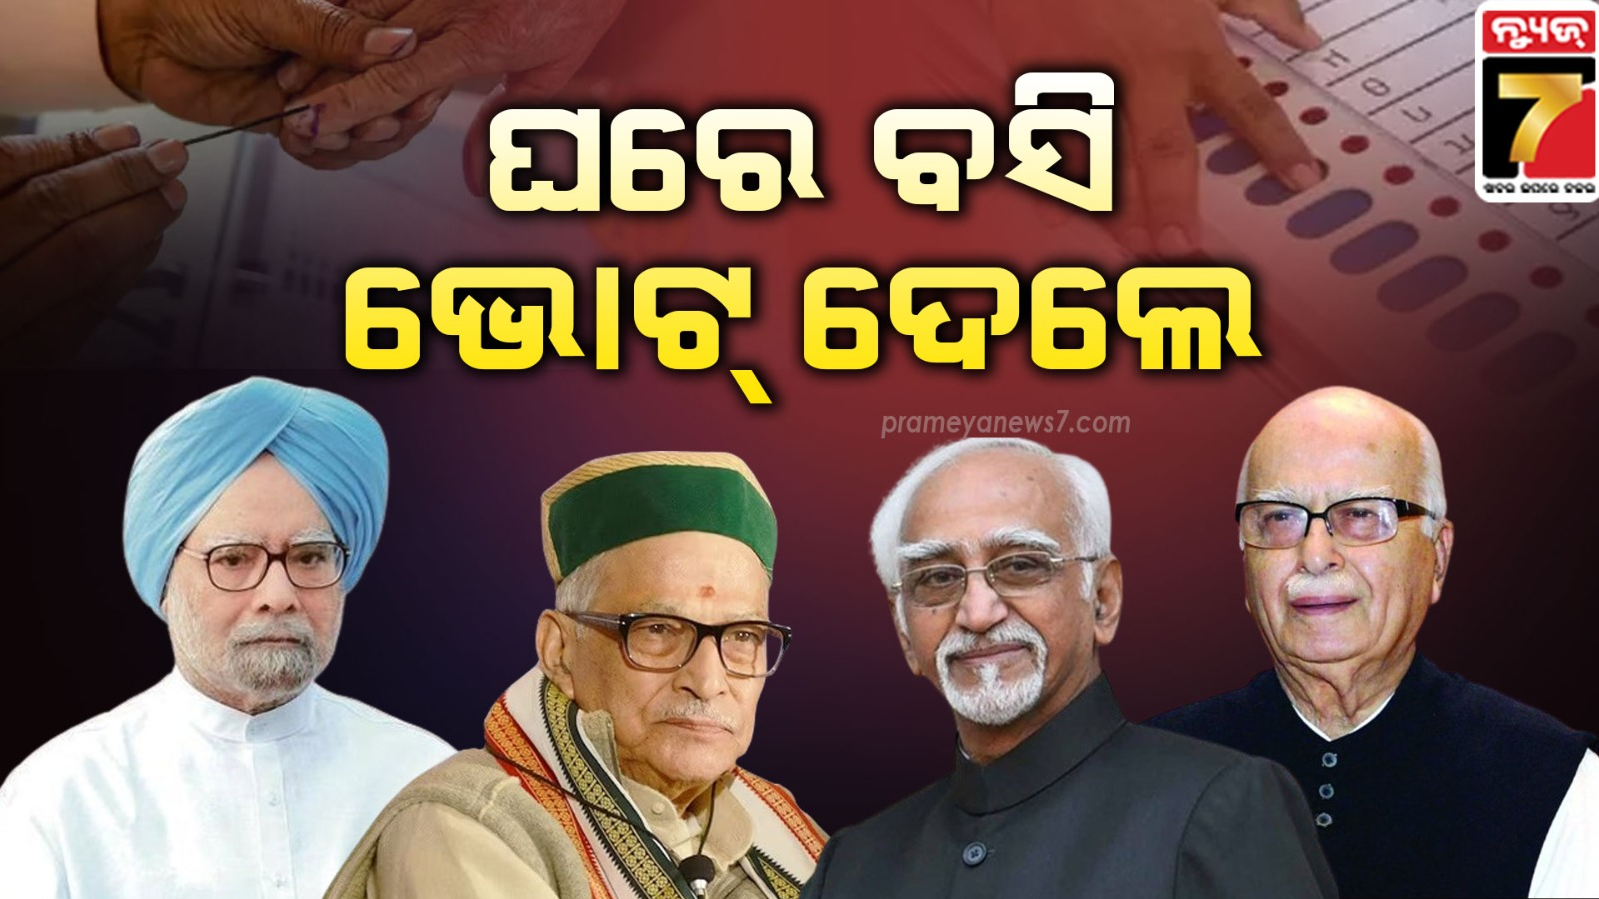 Lok Sabha elections: Manmohan Singh, LK Advani, Hamid Ansari,mm joshi caste vote from home